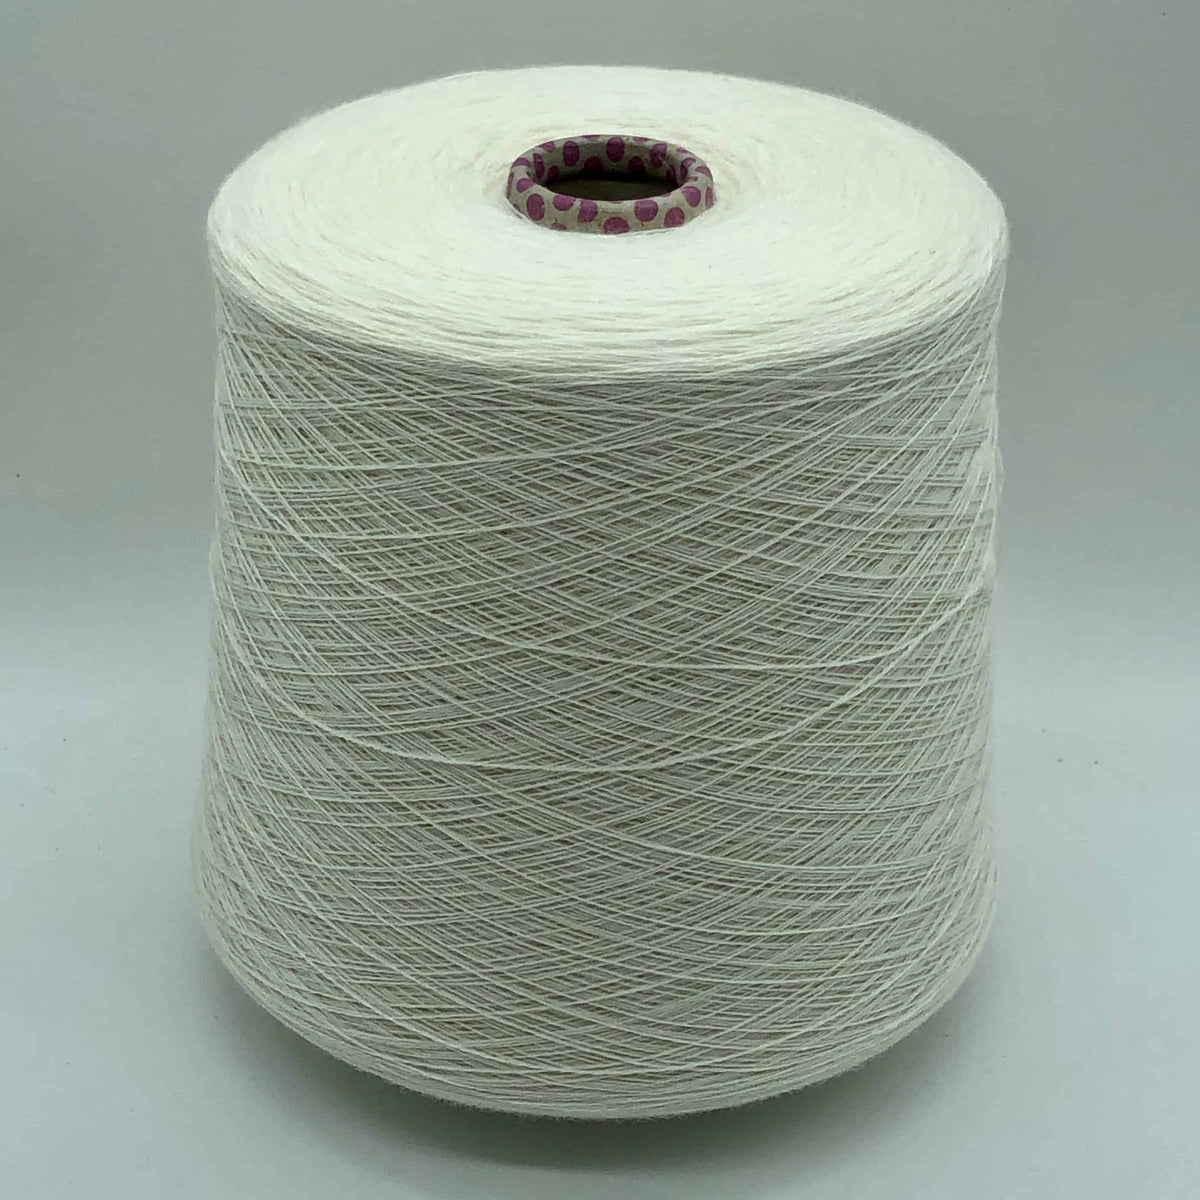 Organic Merino Wool Nm 28/2 - 1kg cones